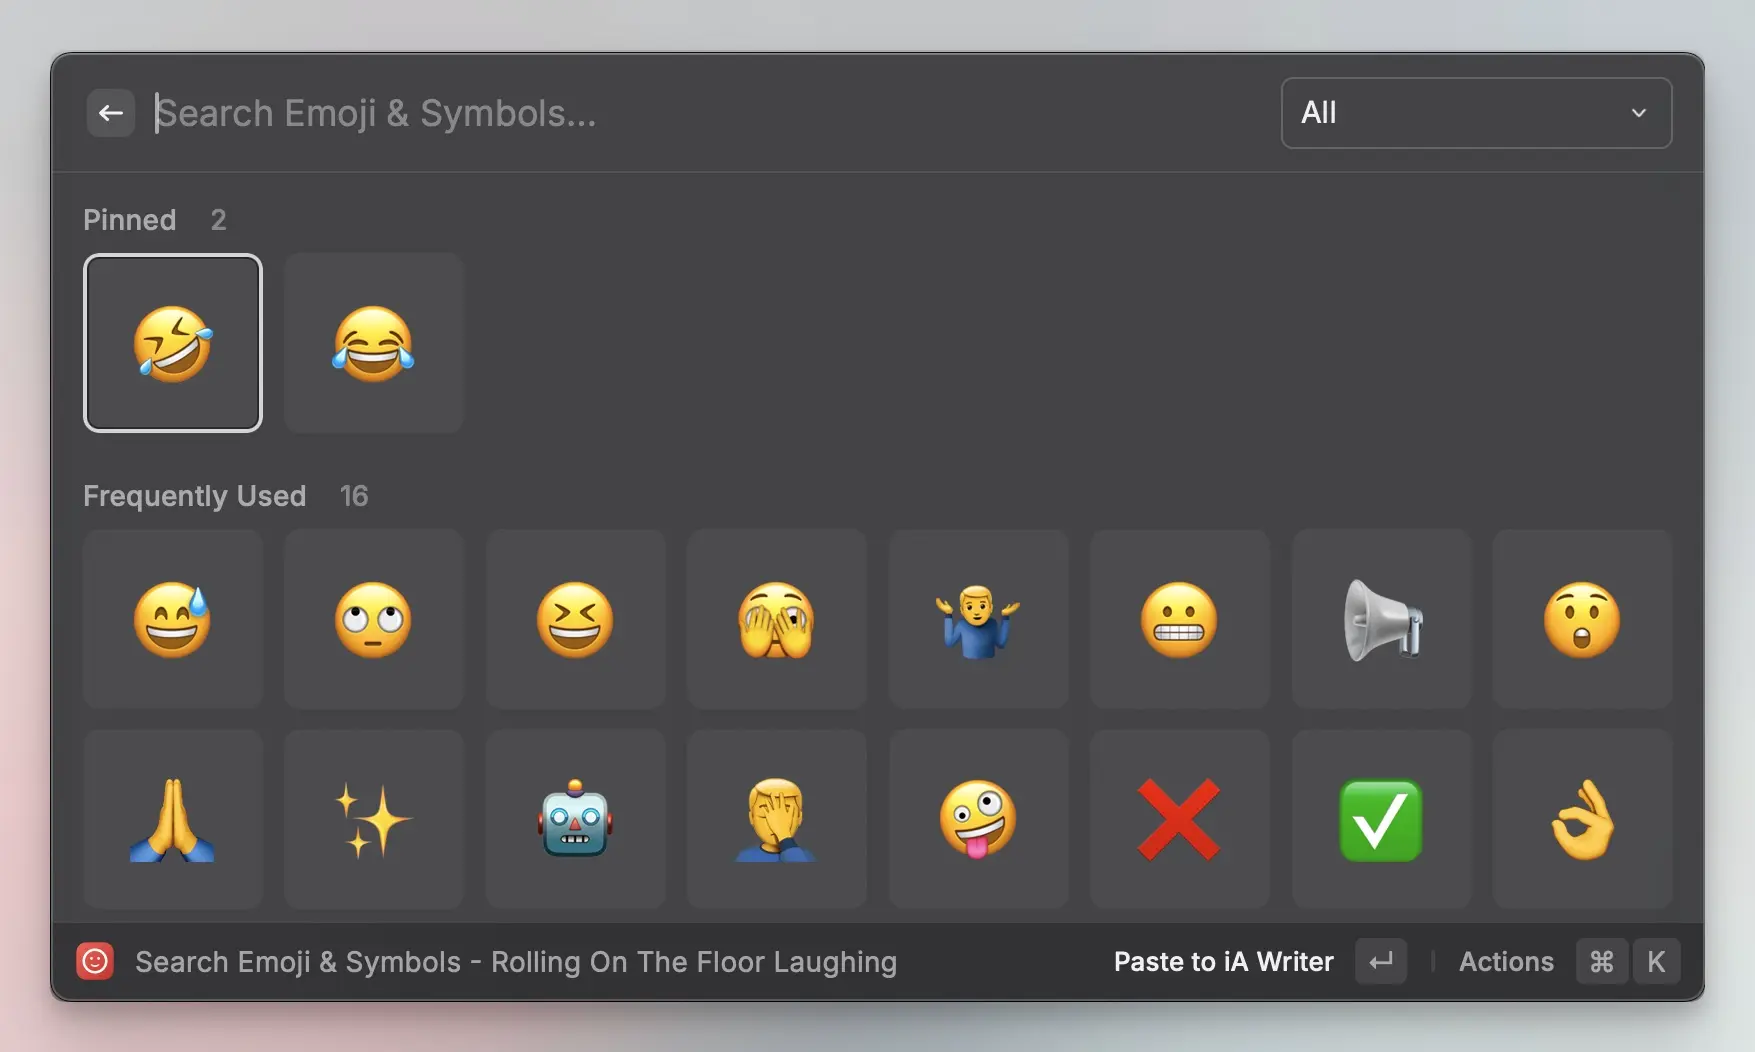 Search Emoji & Symbols